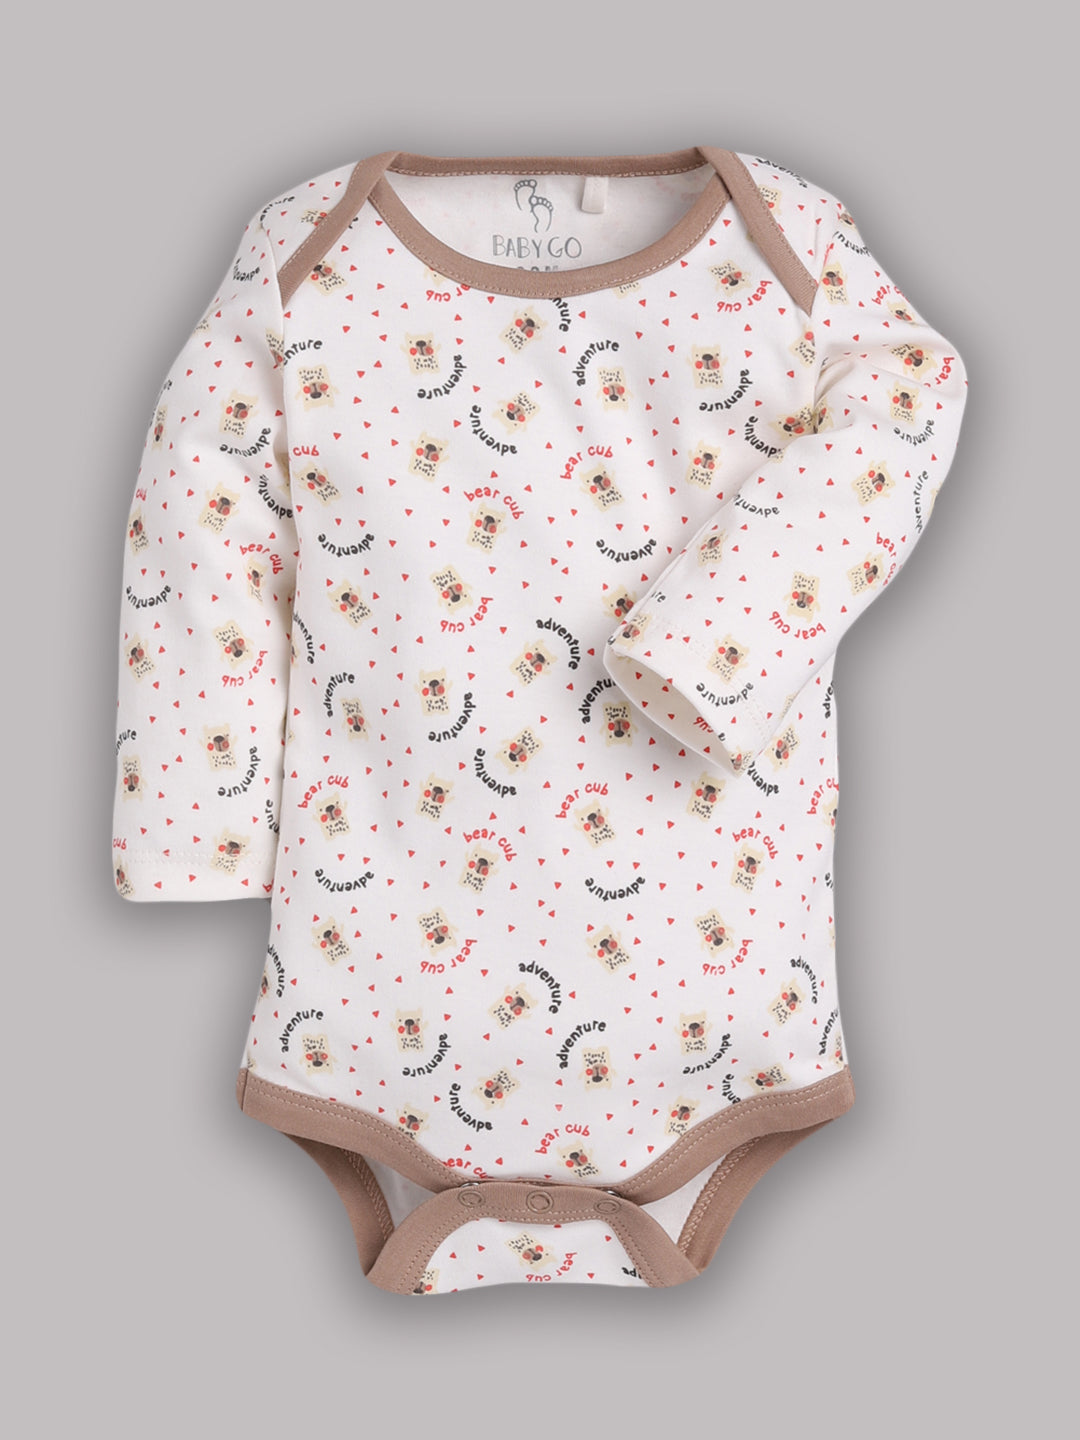 Baby Boy/Girl Full sleeve Romper for Sleep Suit/Comfort fit Set of 2 - BEIGE